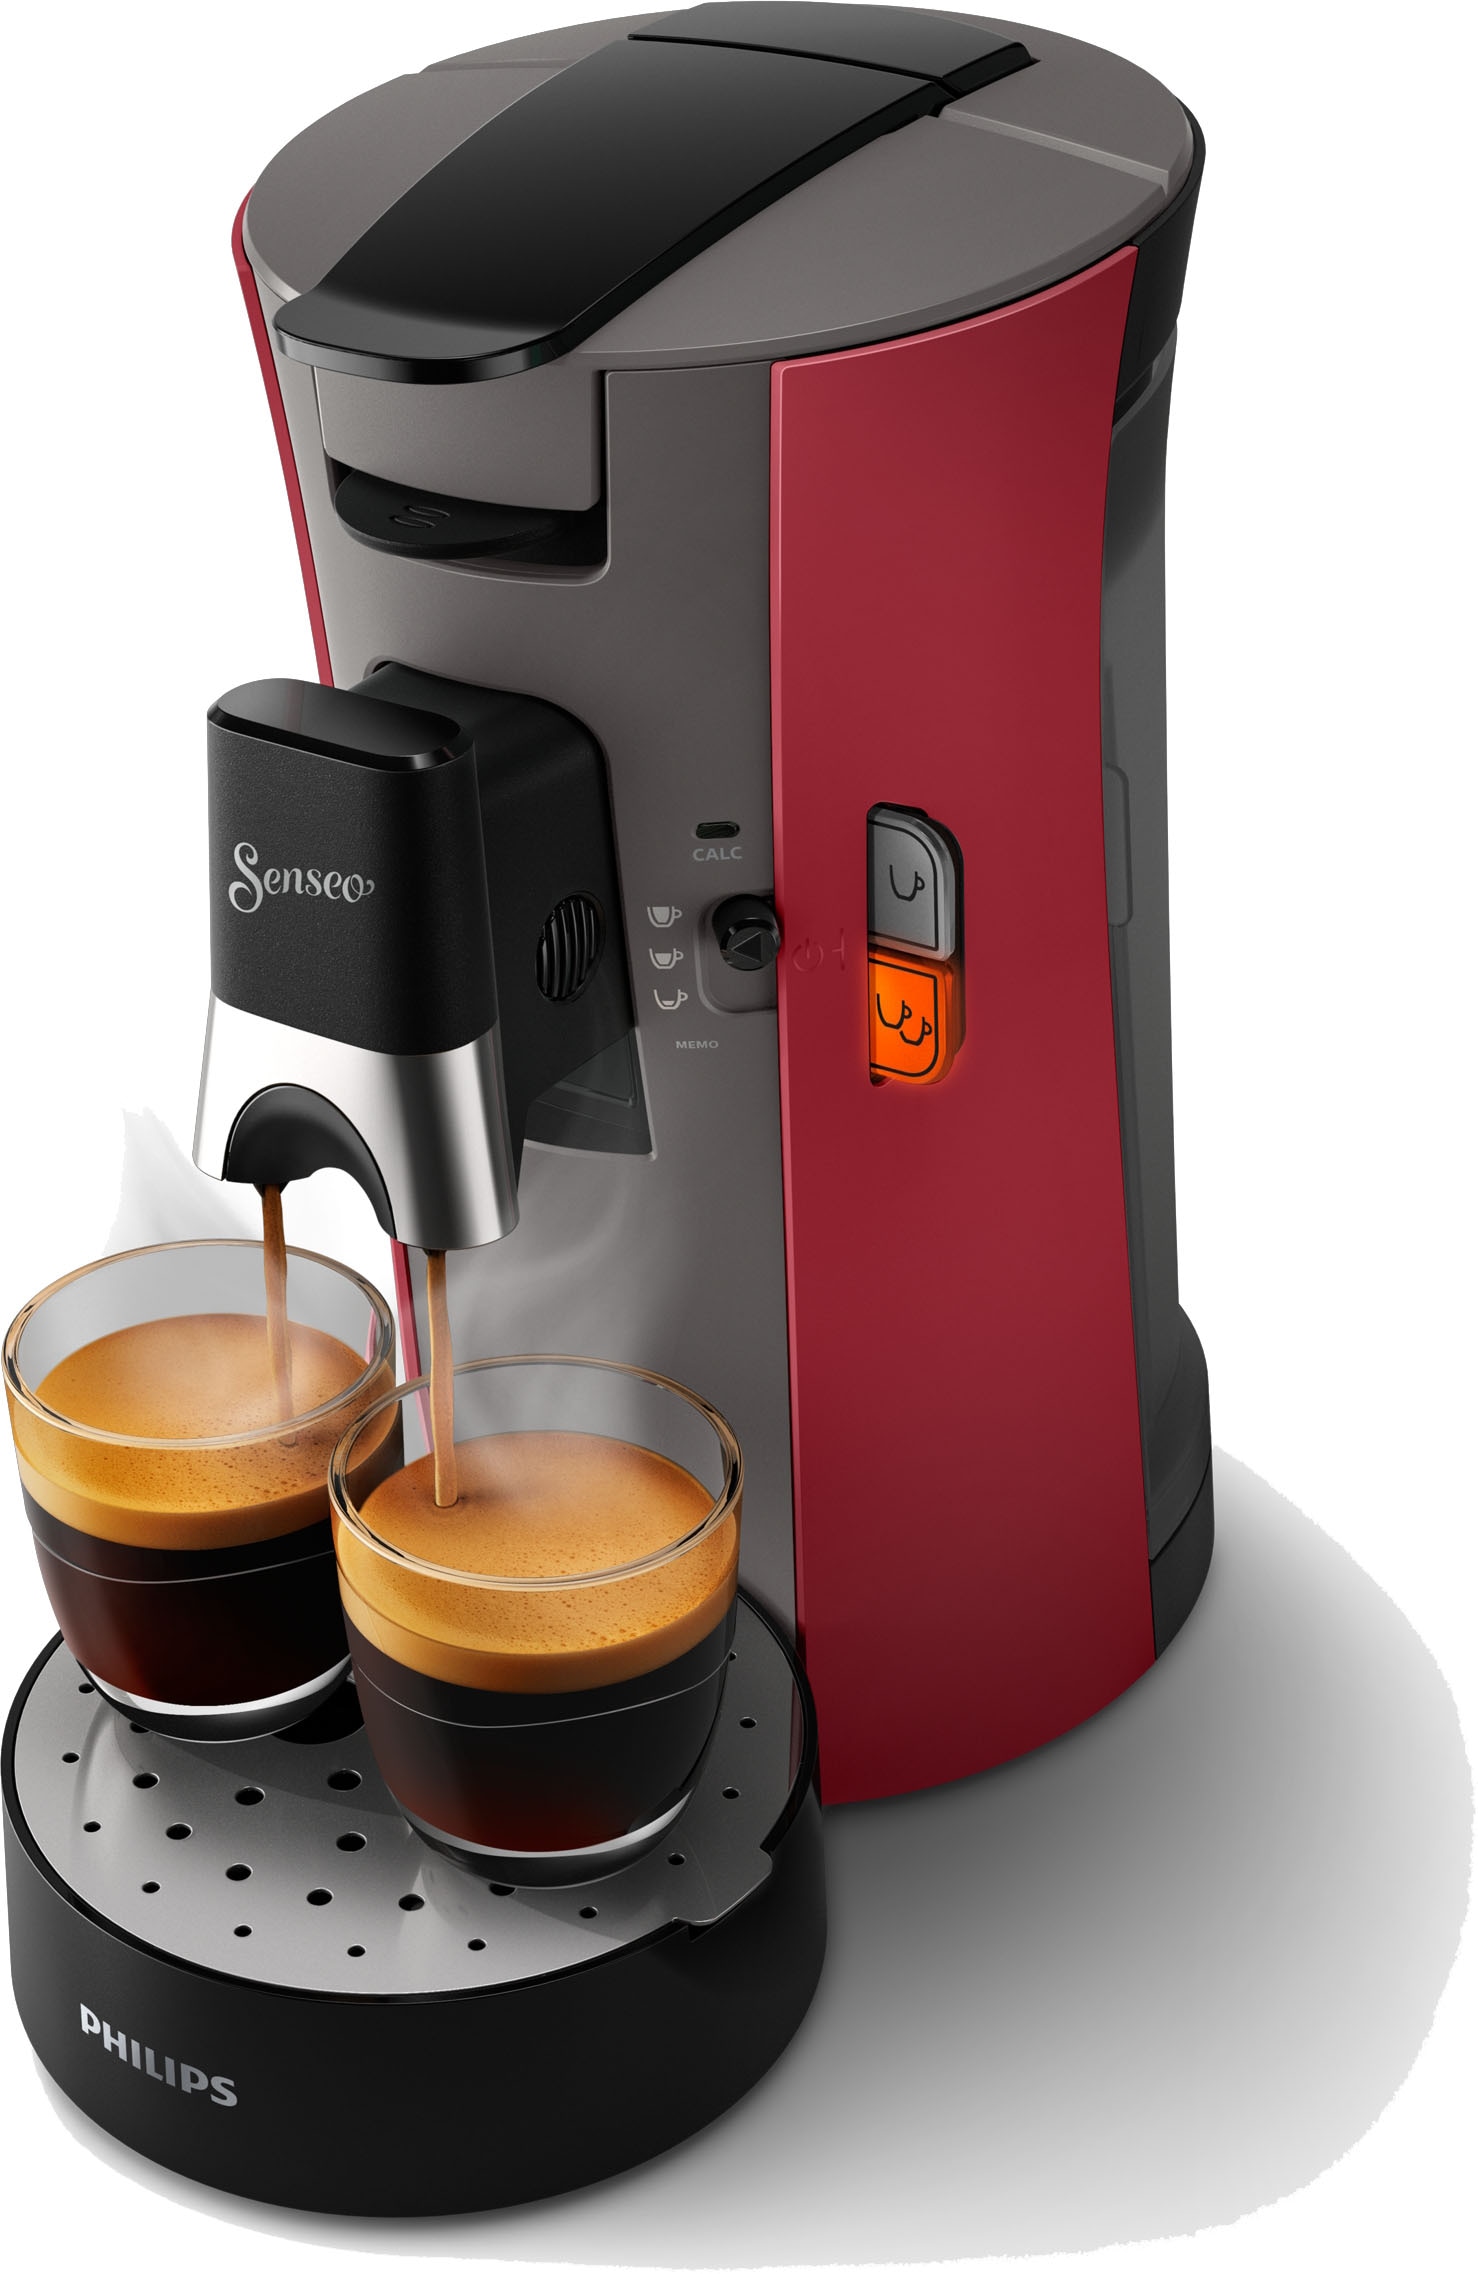 Philips Senseo Kaffeepadmaschine »Select CSA240/90«, aus 21% recyceltem  Plastik und mit 3 Kaffeespezialitäten, dunkelrot | BAUR